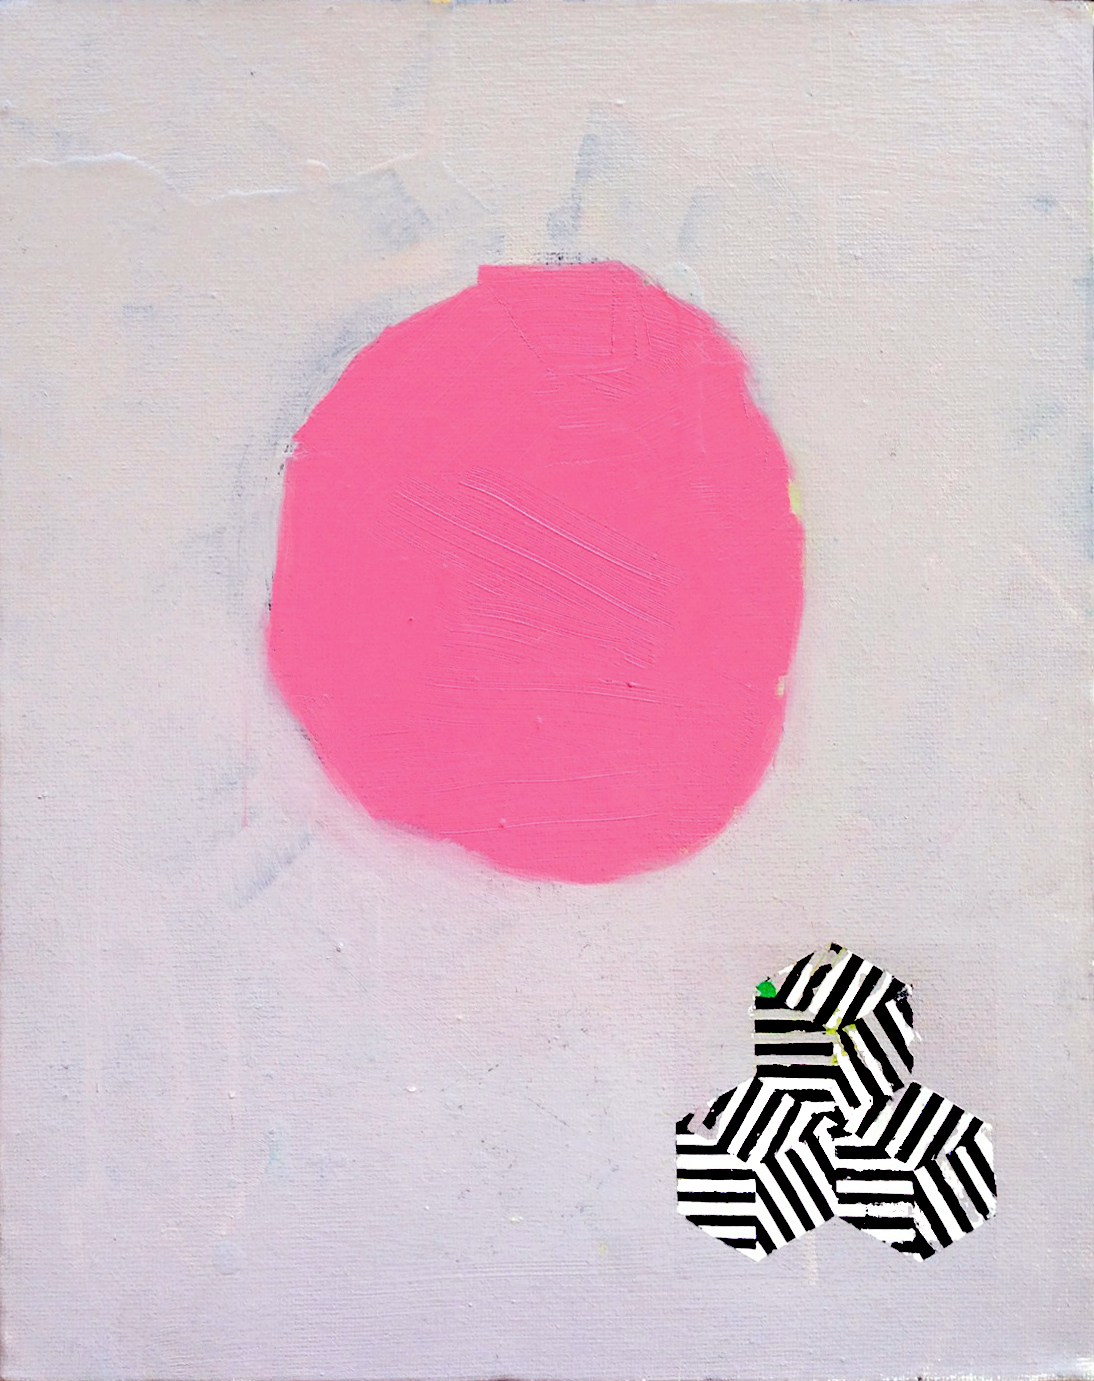 Miniature 1 (Pink Circle) 2013 Oil on canvas    30 x 23 cm